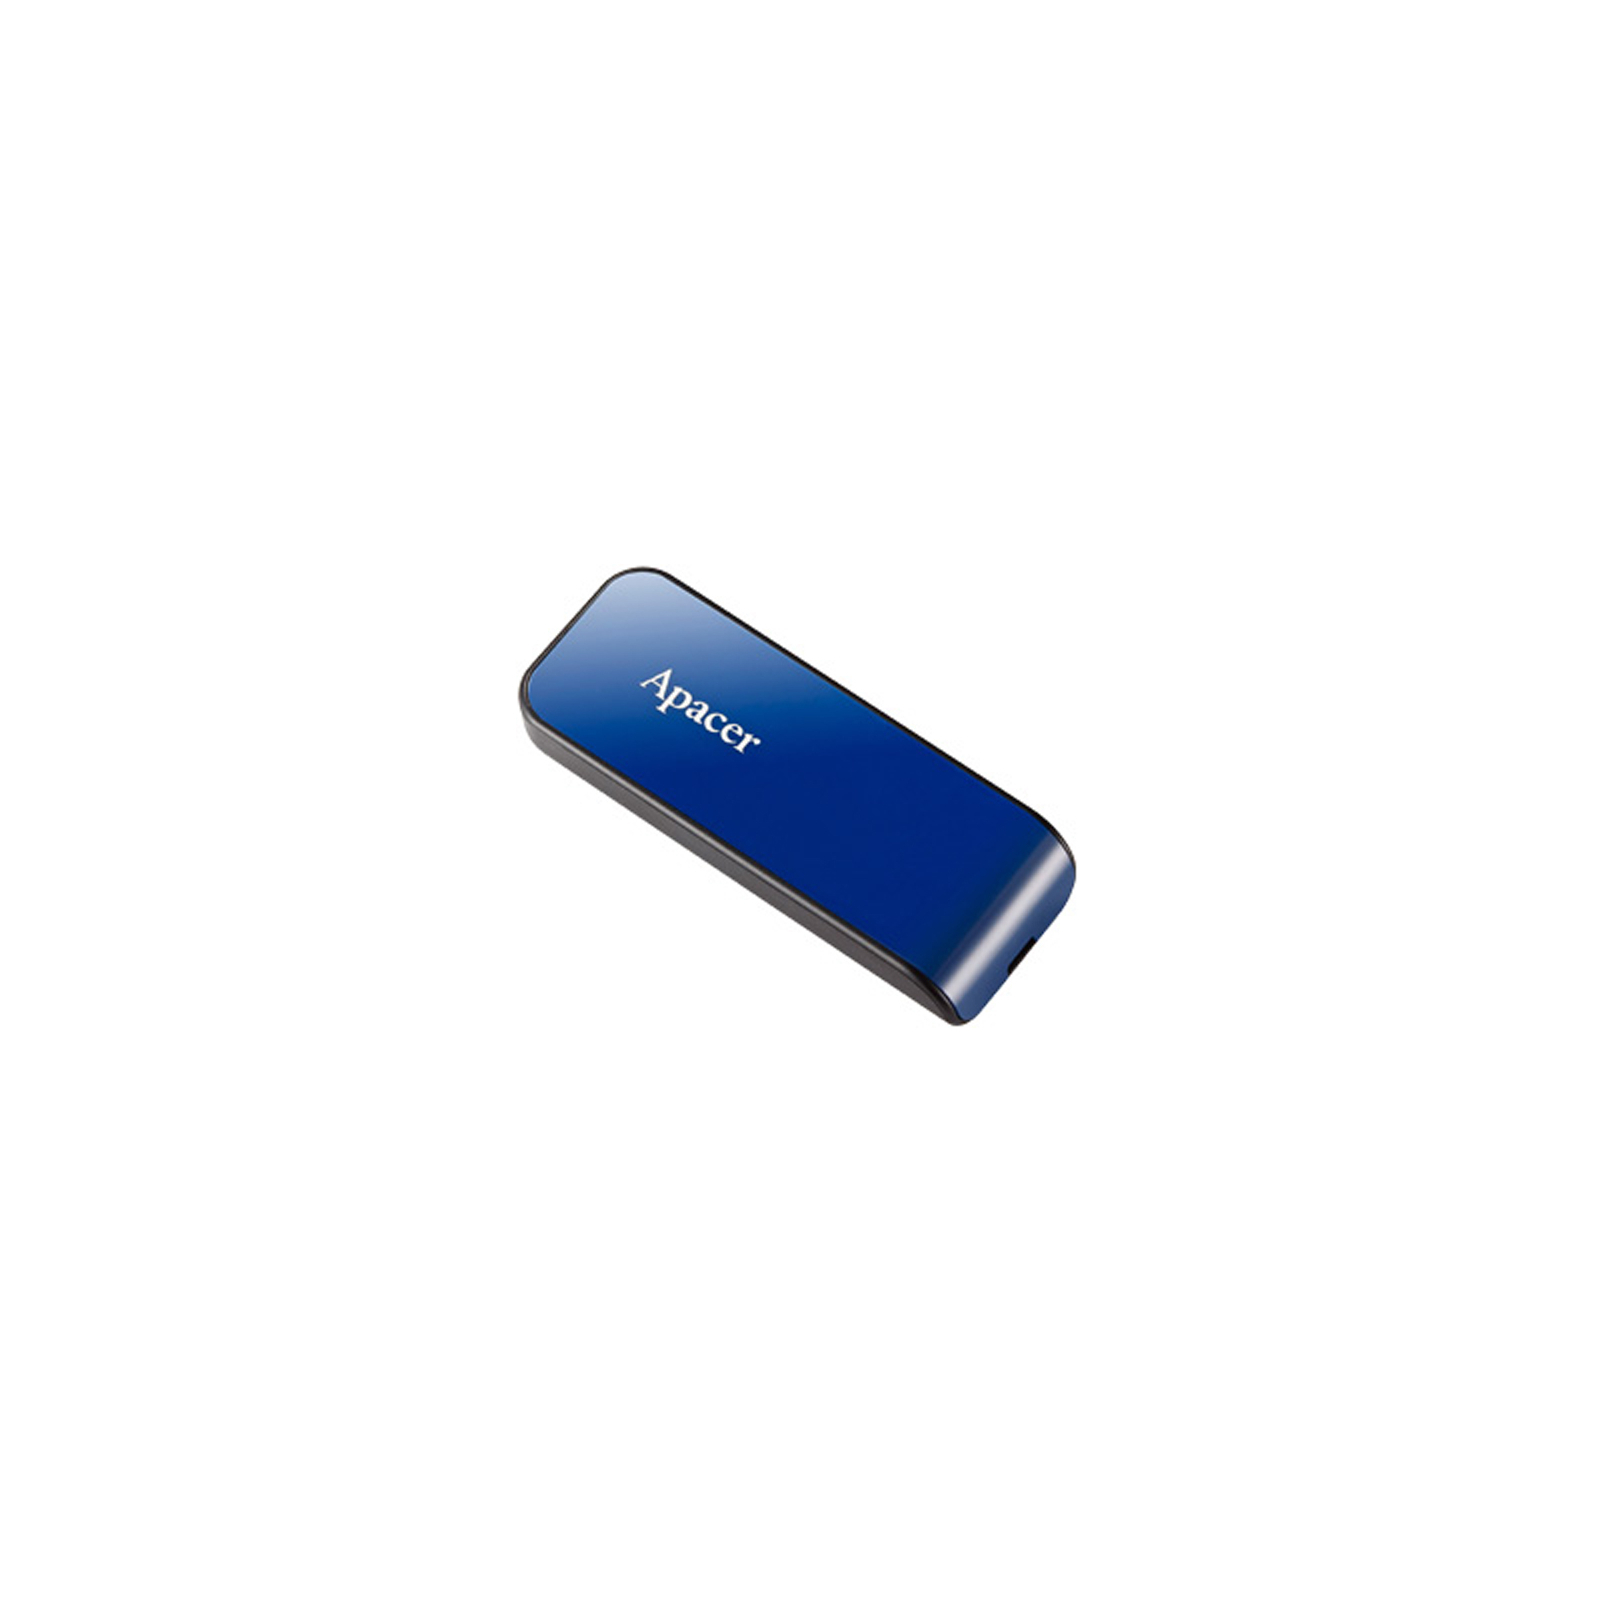 USB флеш накопитель Apacer 64GB AH334 blue USB 2.0 (AP64GAH334U-1) изображение 2